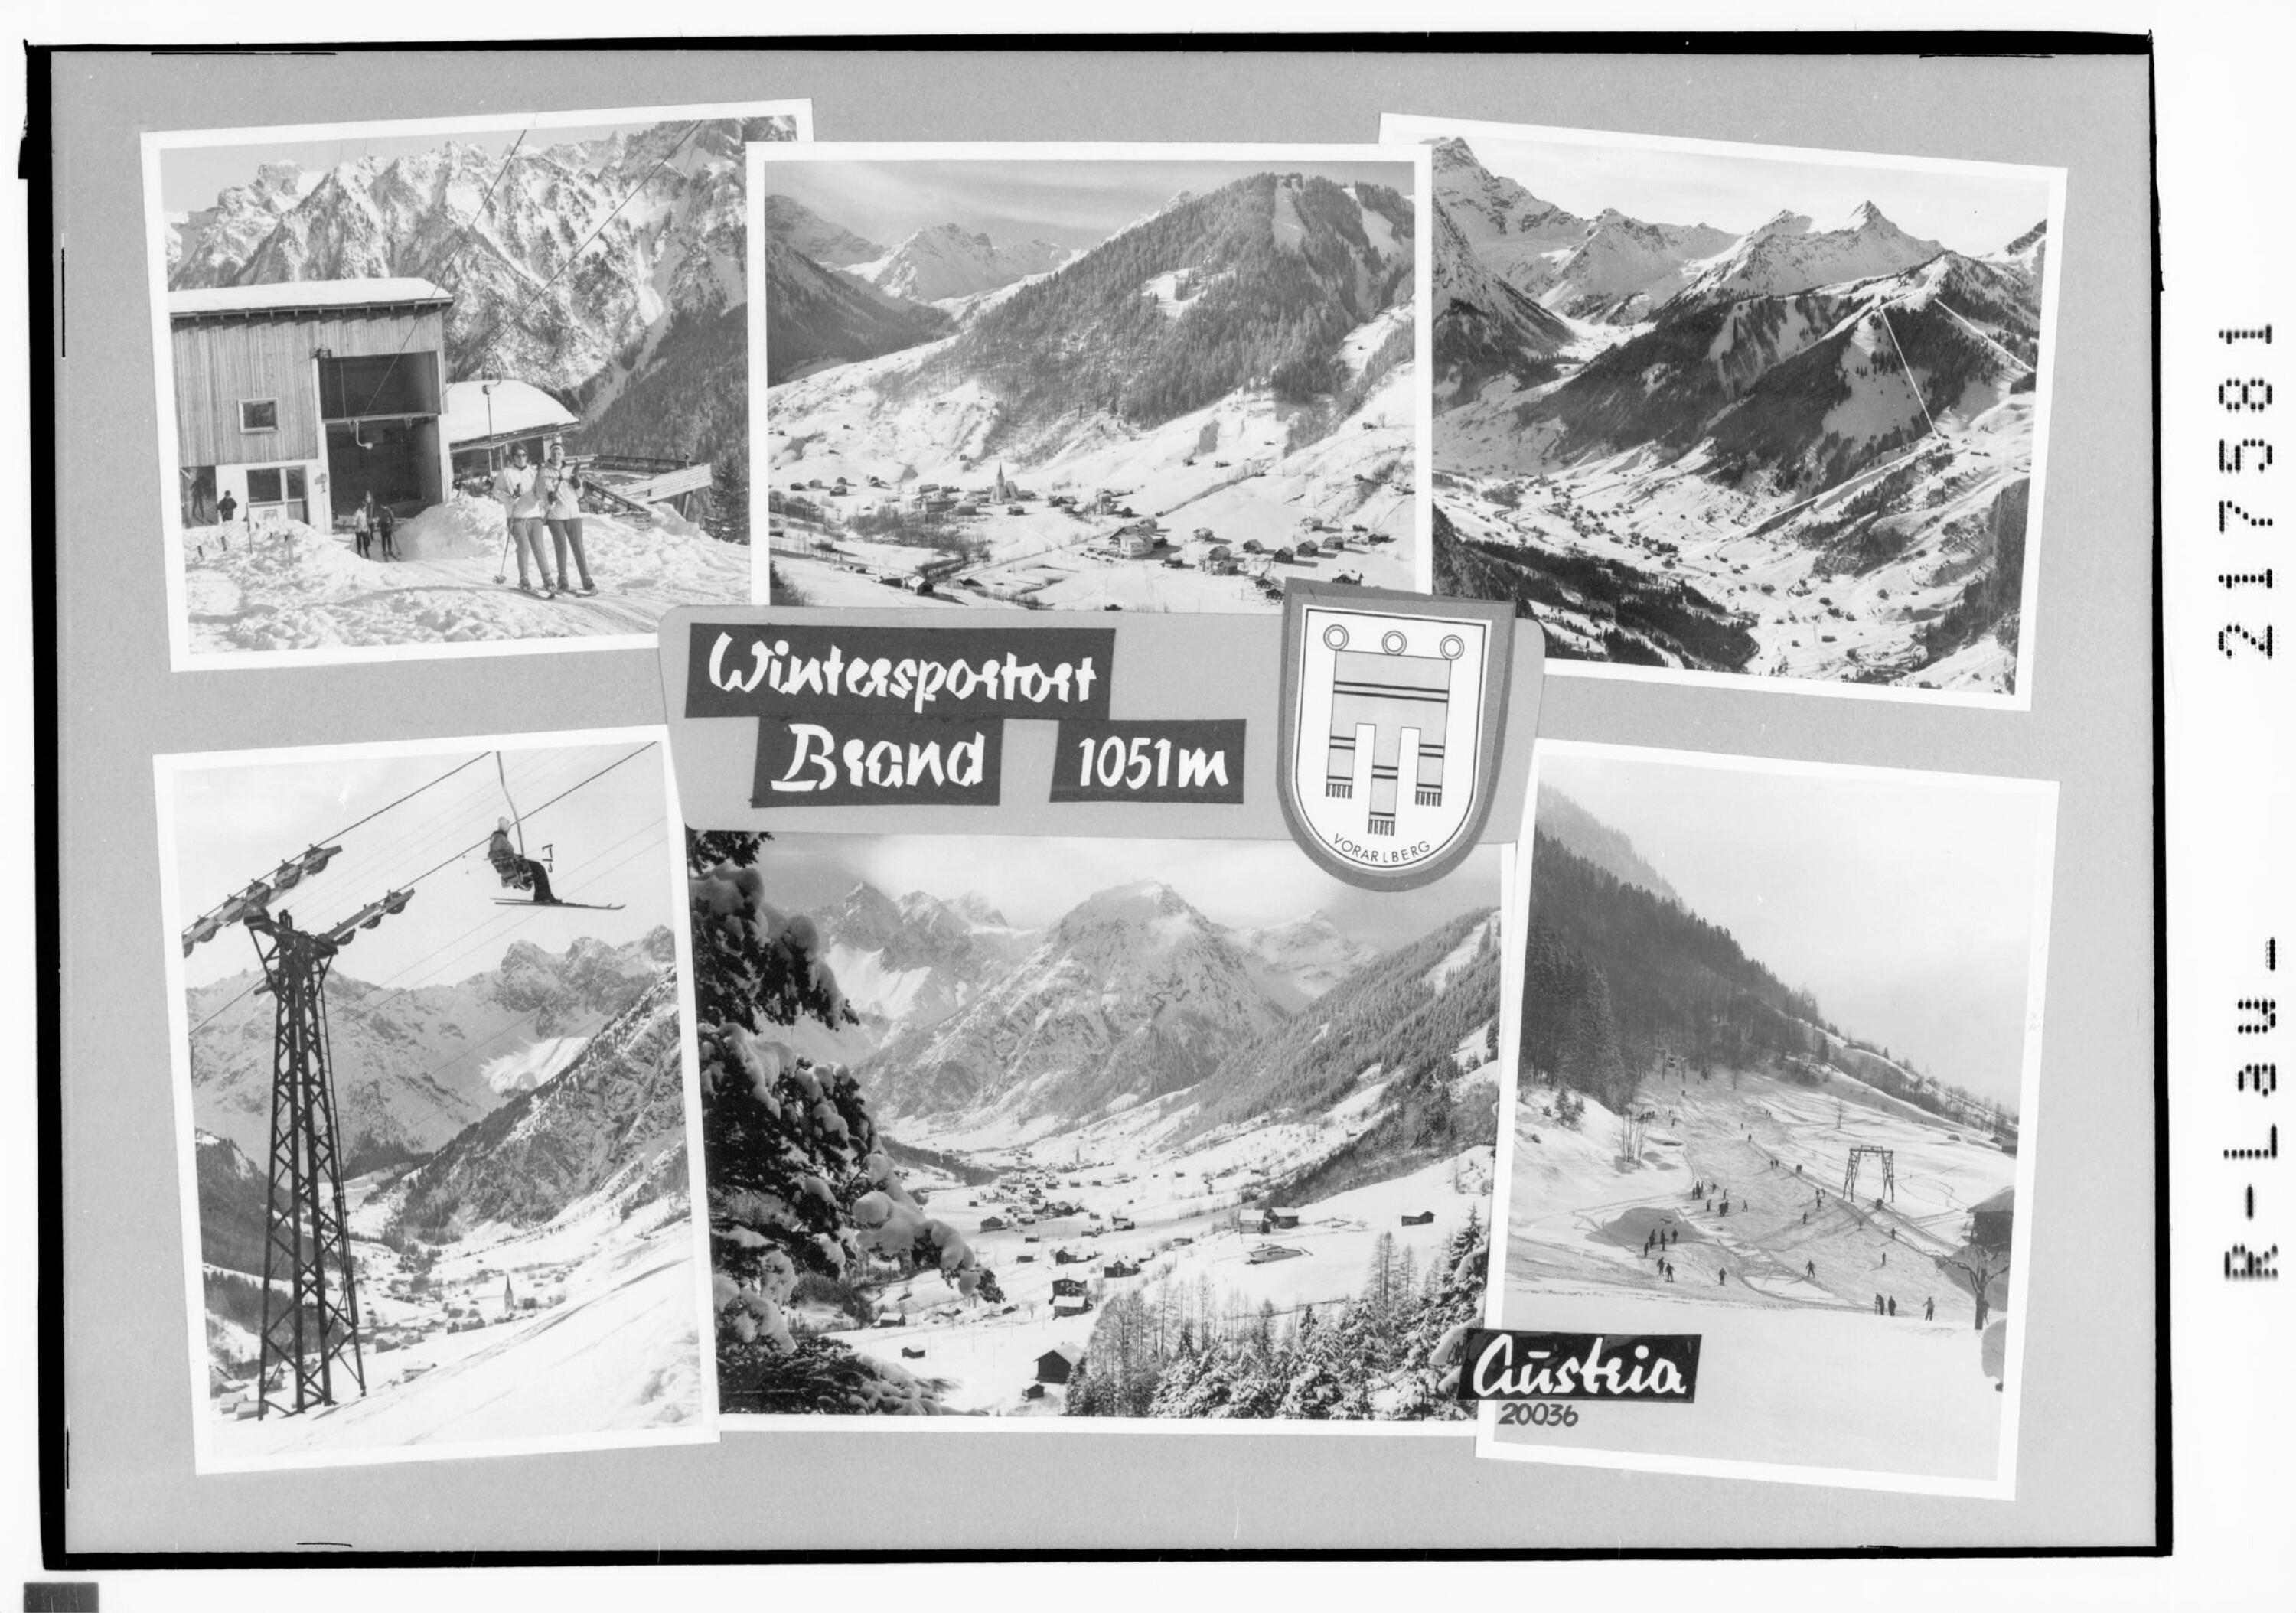 Wintersportort Brand 1051 m Austria></div>


    <hr>
    <div class=